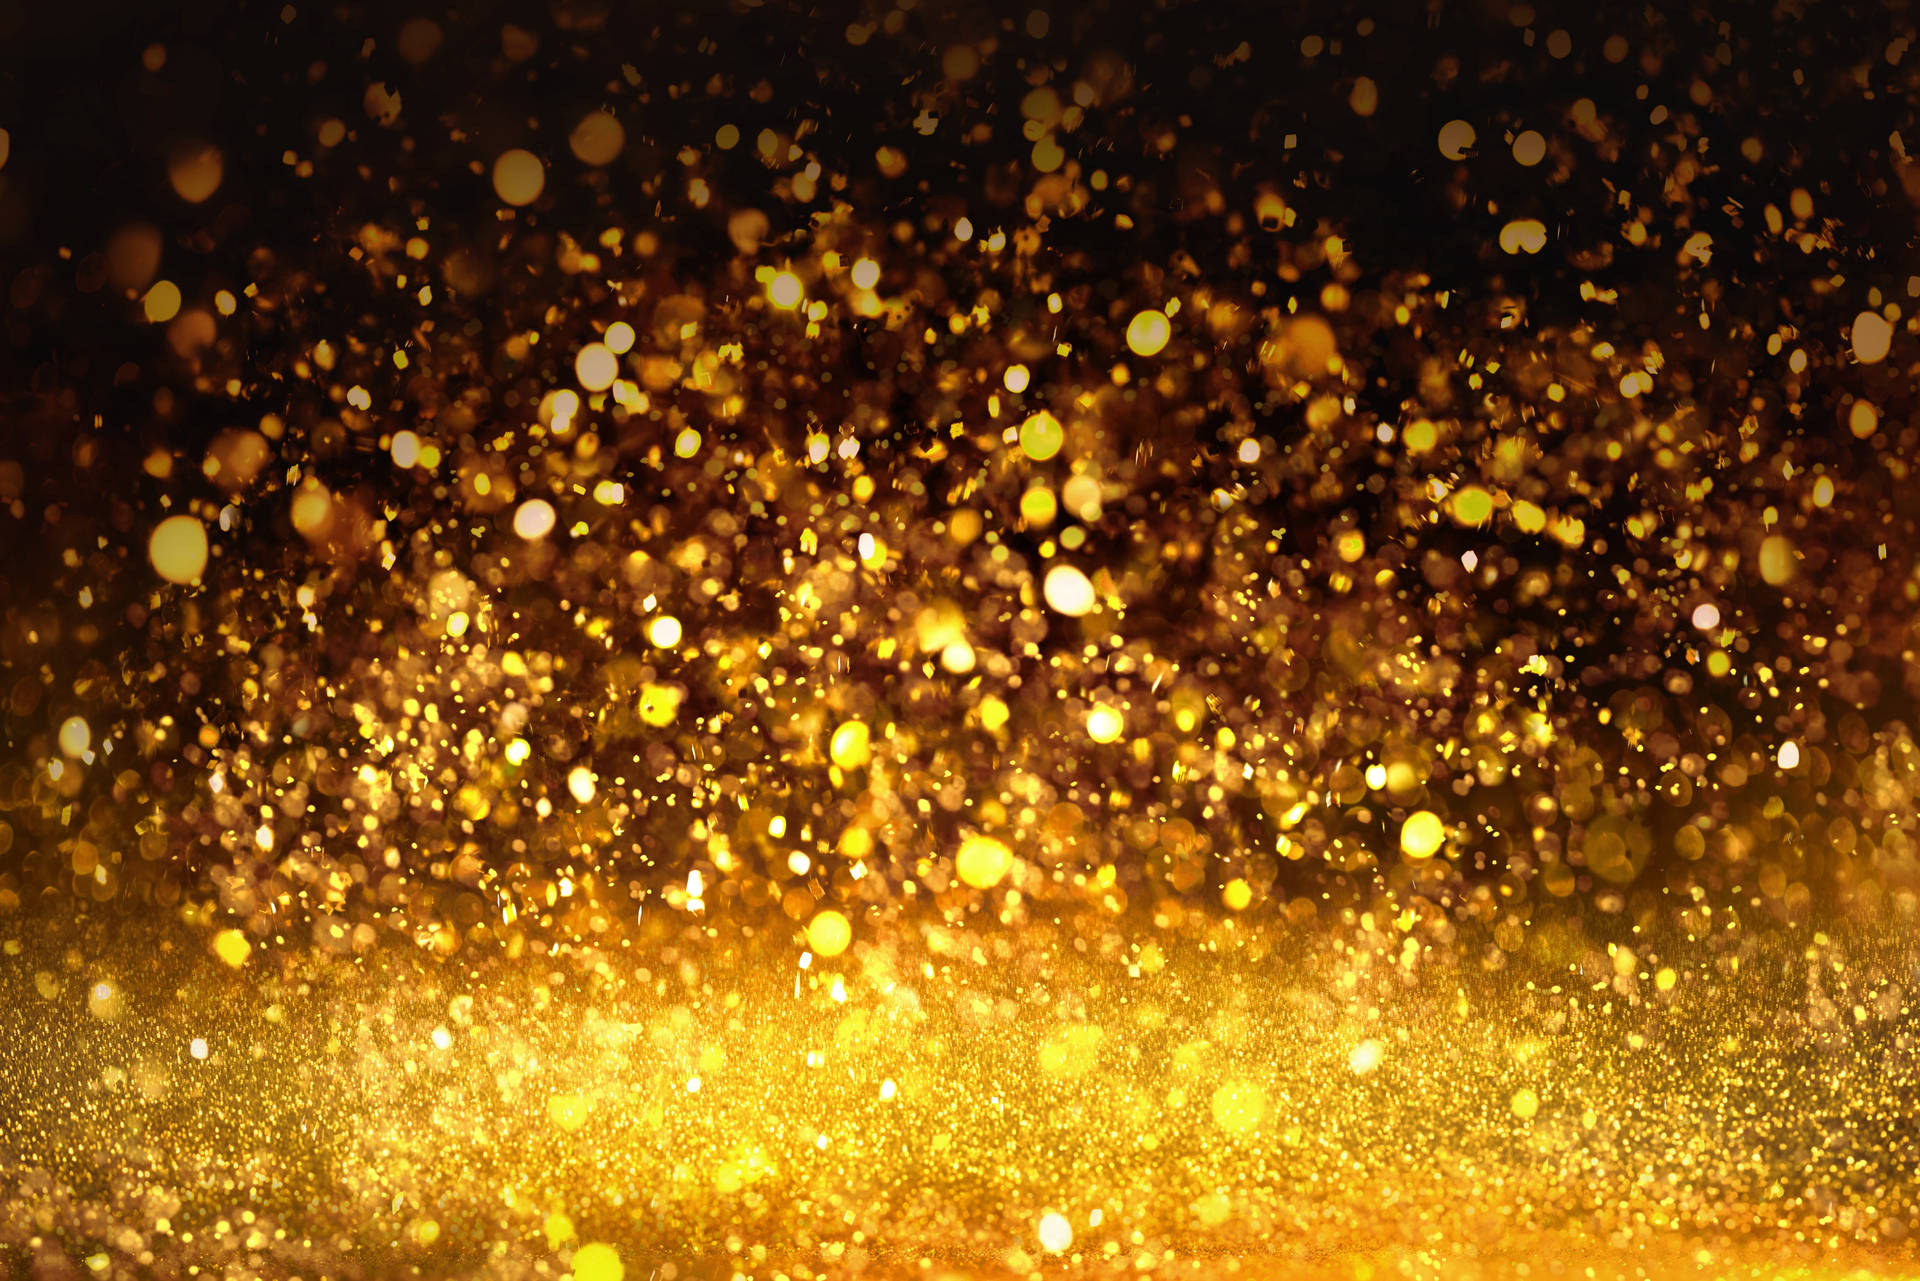 Shimmering Golden Glitters On A Dark Background